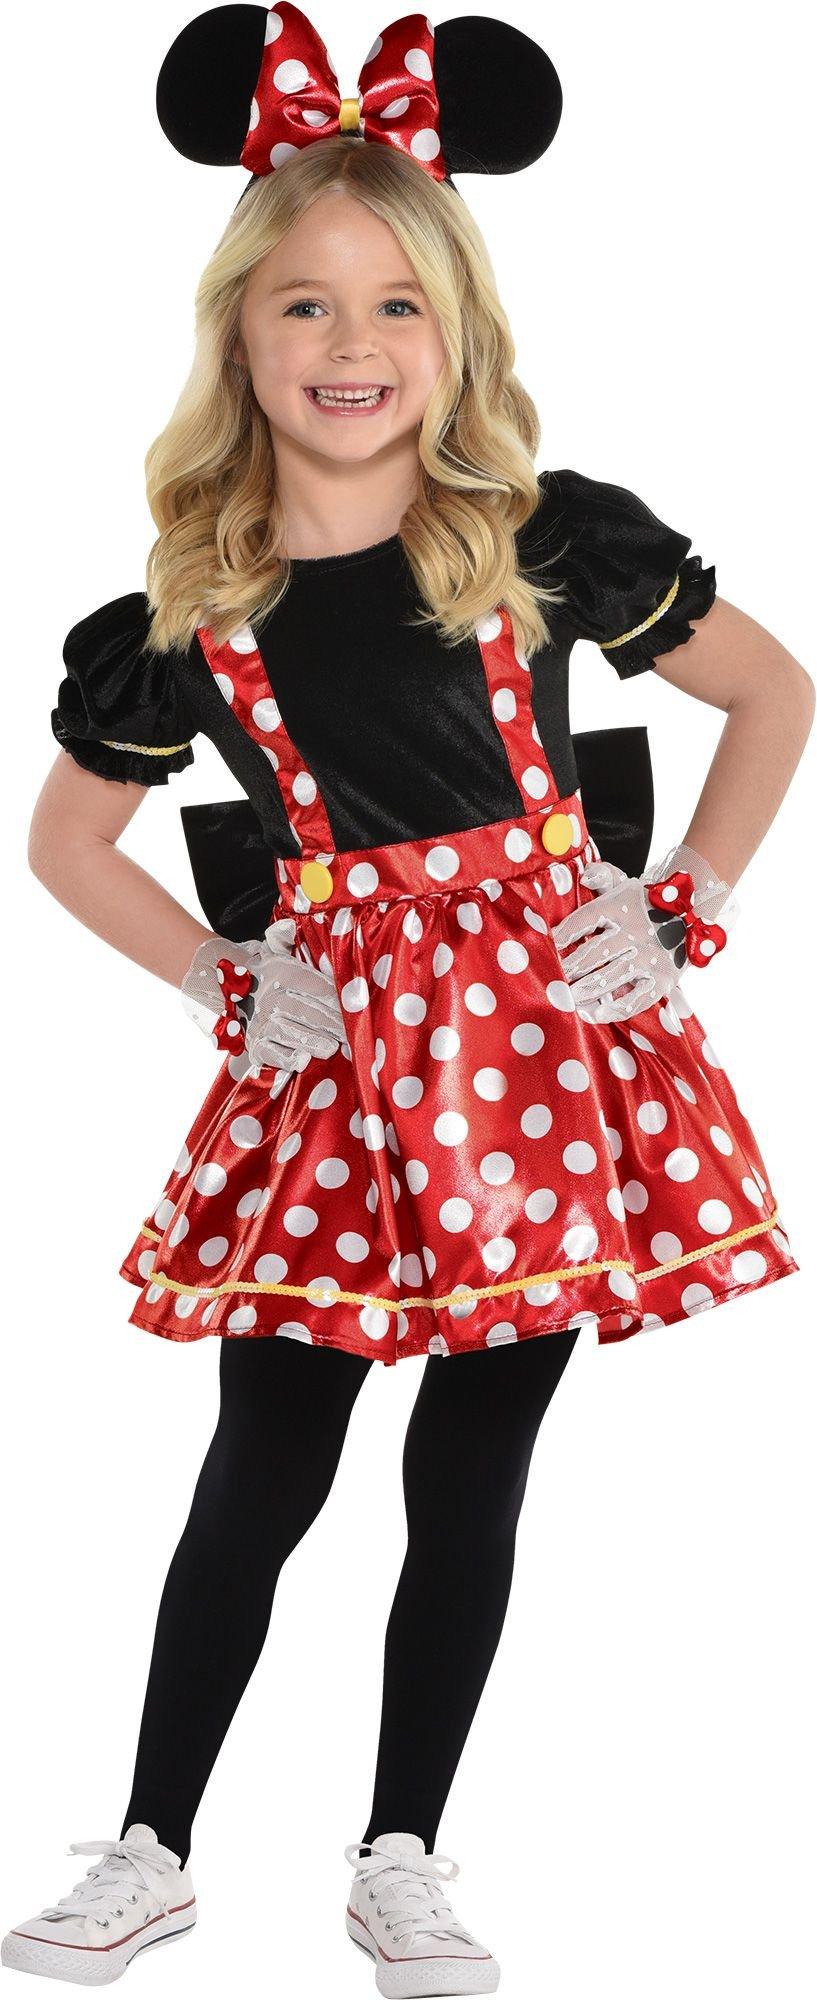 Kids' Red Polka Dot Minnie Mouse Costume - Disney